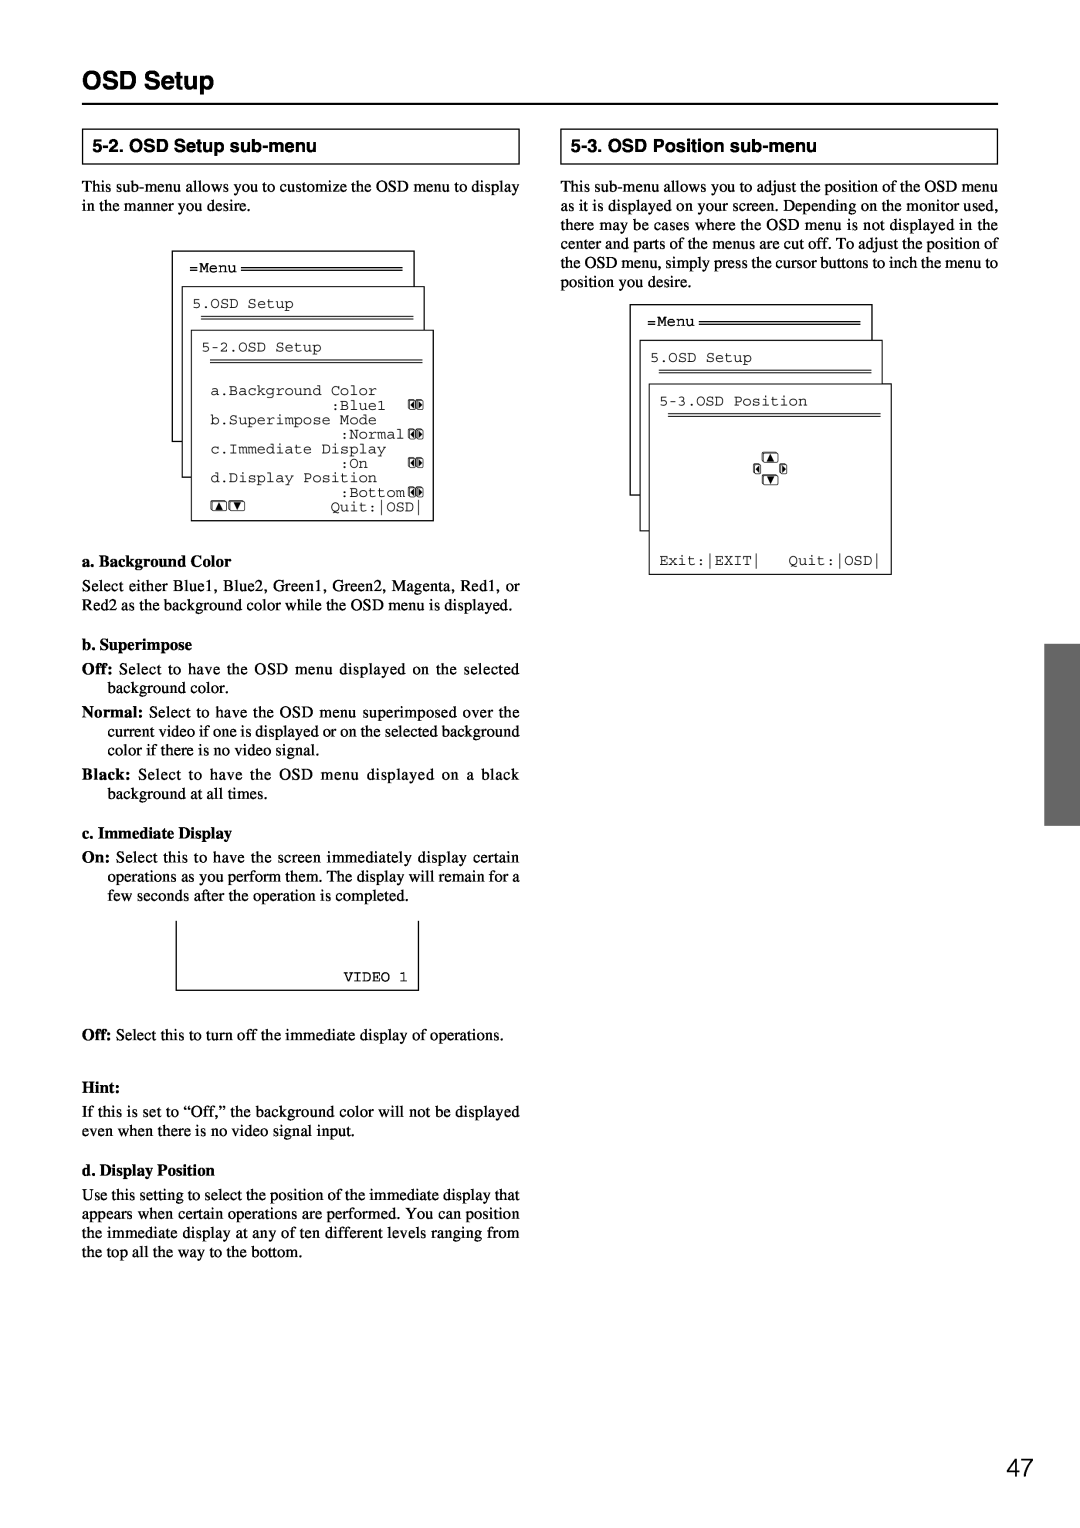 Integra DTR-7.1 appendix OSD Setup, a. Background Color, b. Superimpose, c. Immediate Display, Hint, d. Display Position 